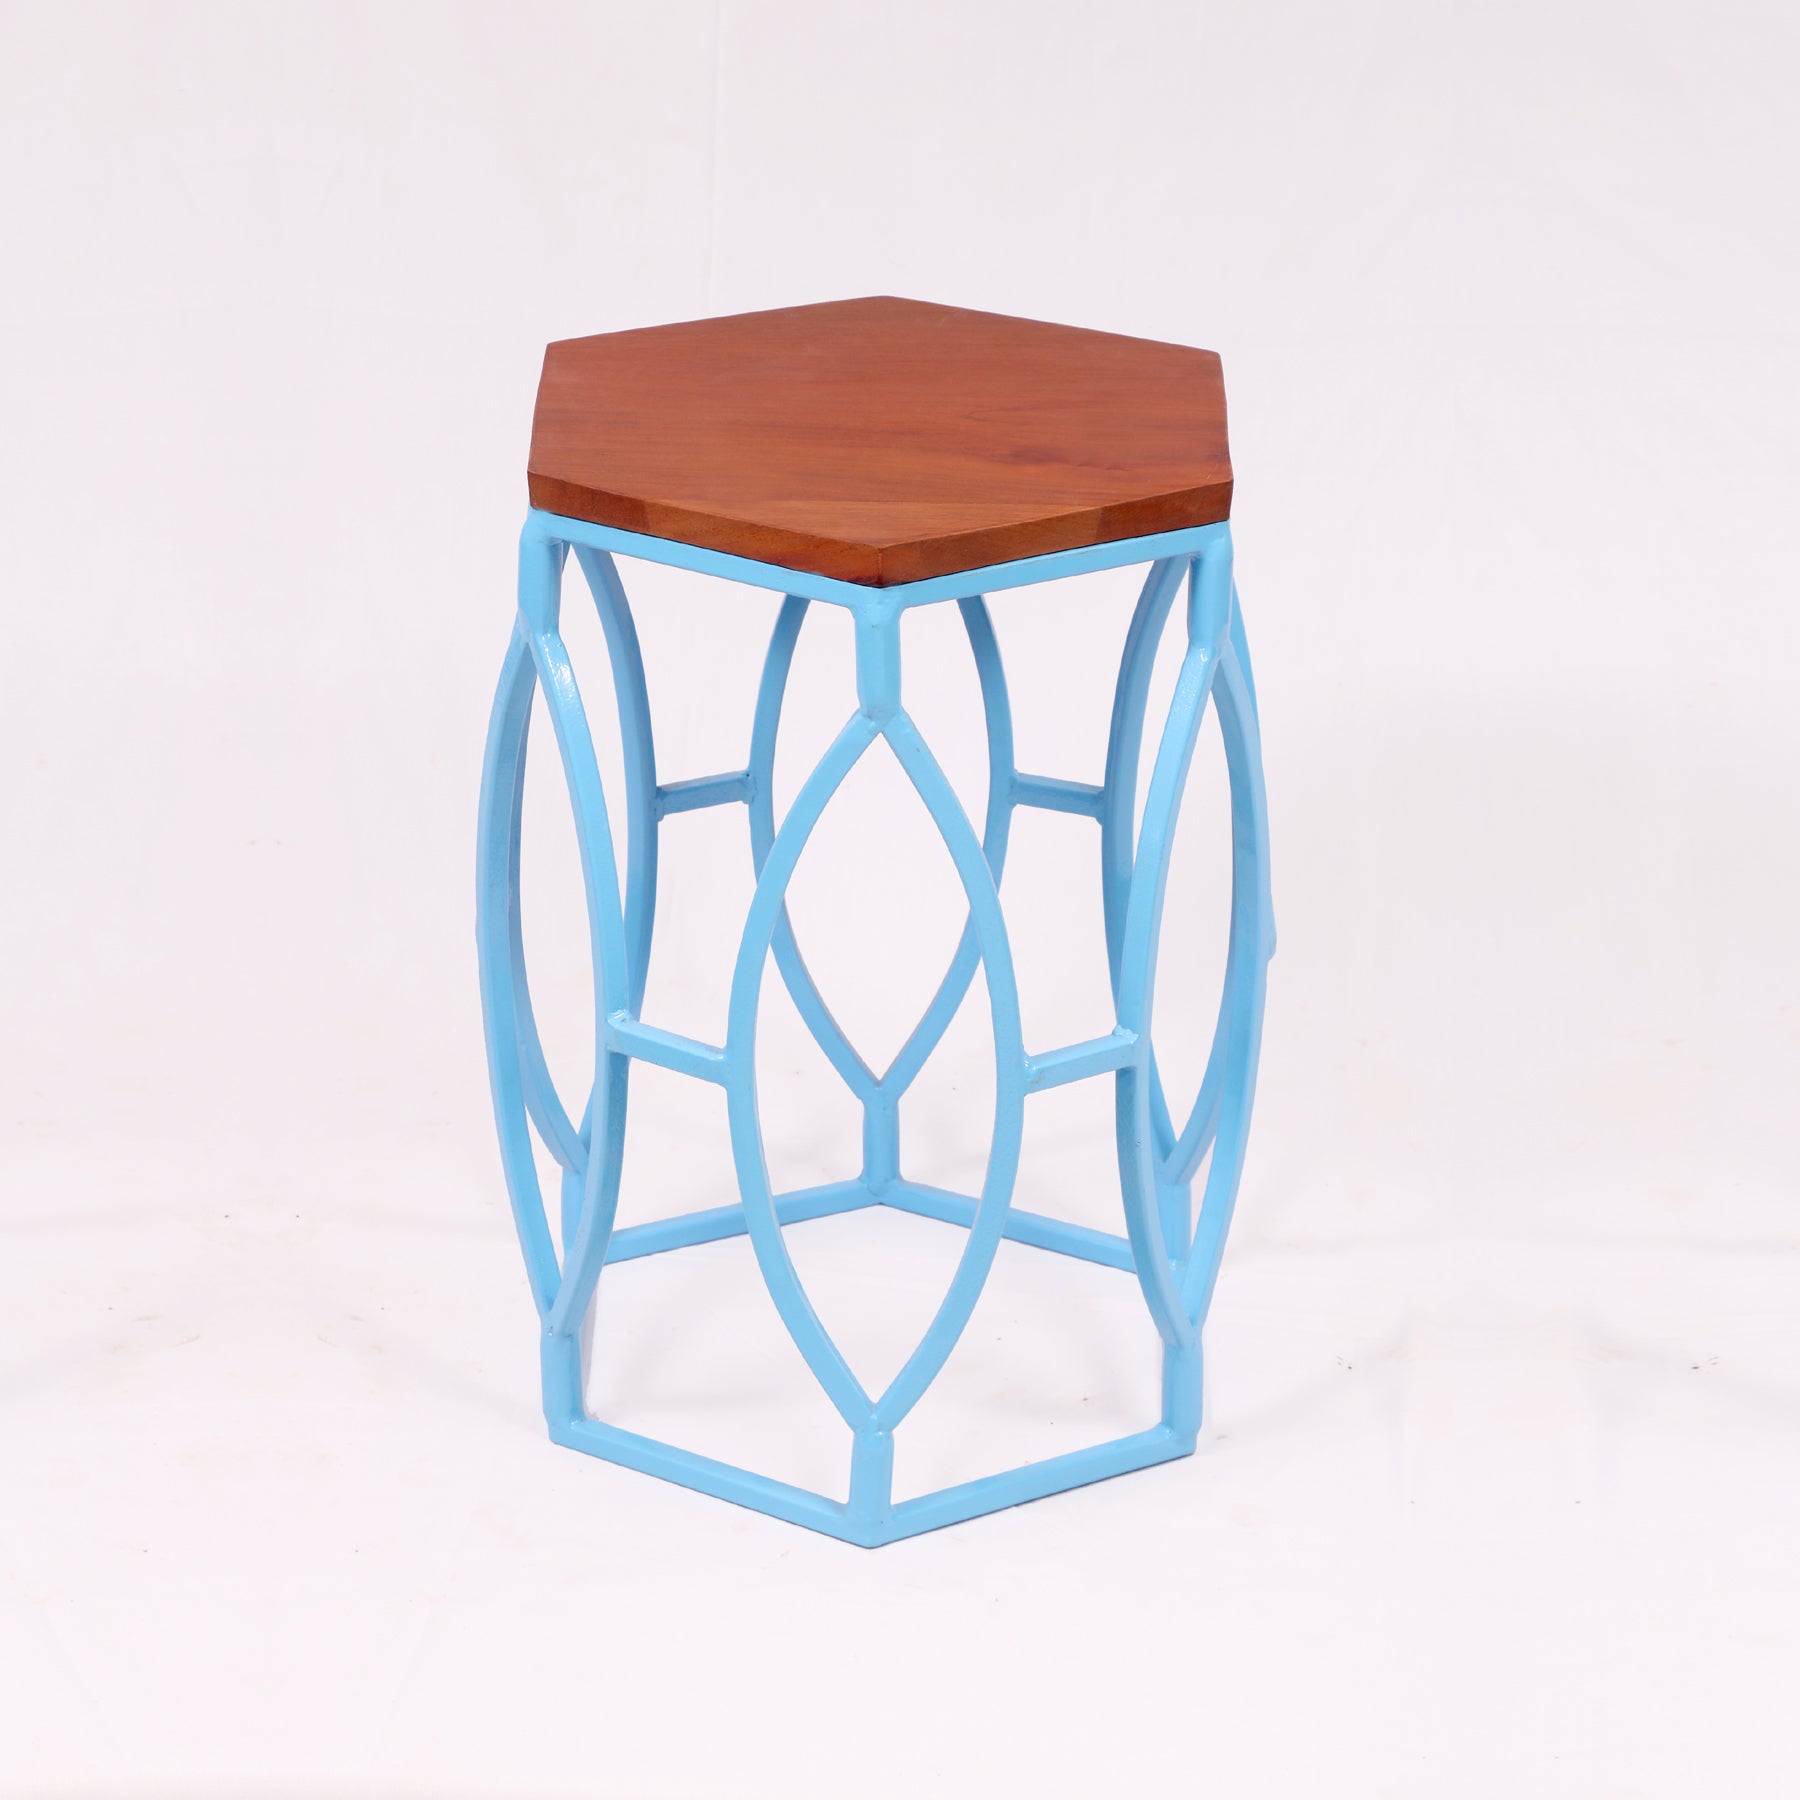 Hexagonal Metallic Coffee Table (Blue) End Table